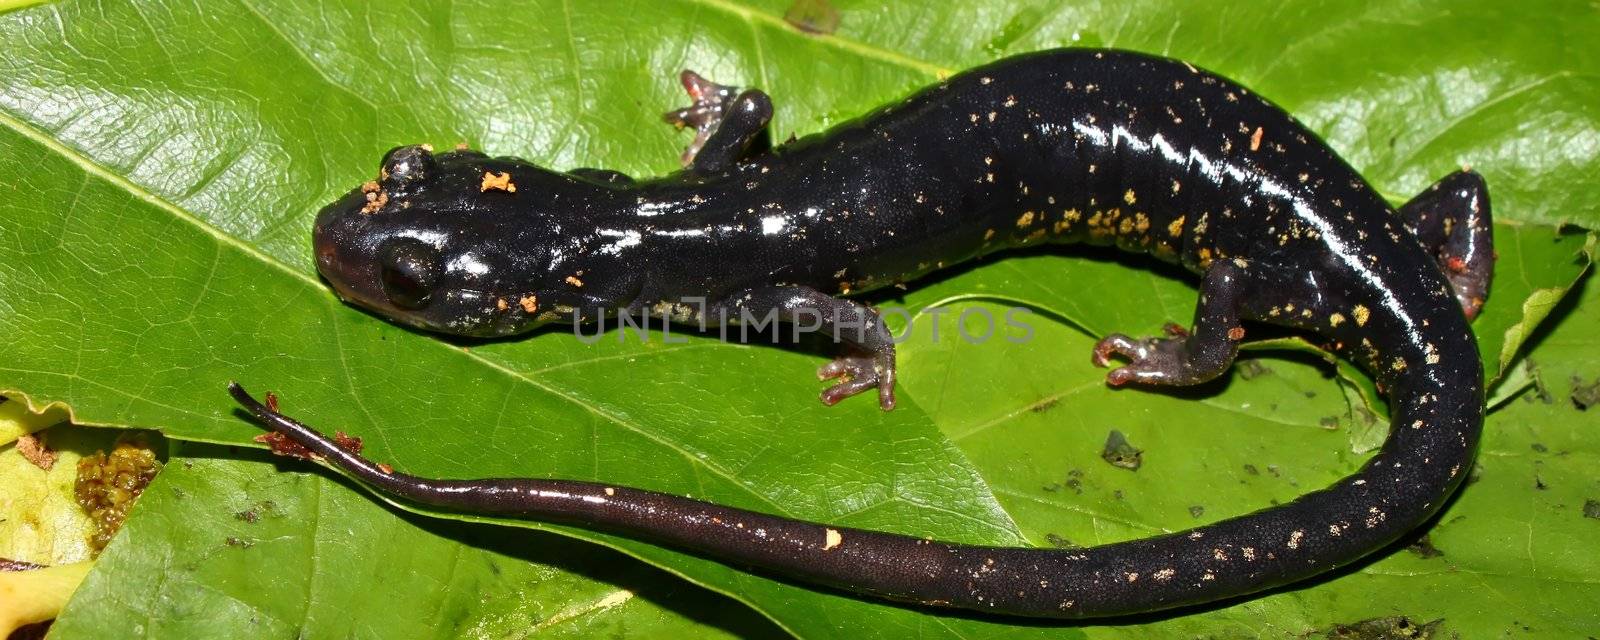 Slimy Salamander (Plethodon glutinosus) by Wirepec